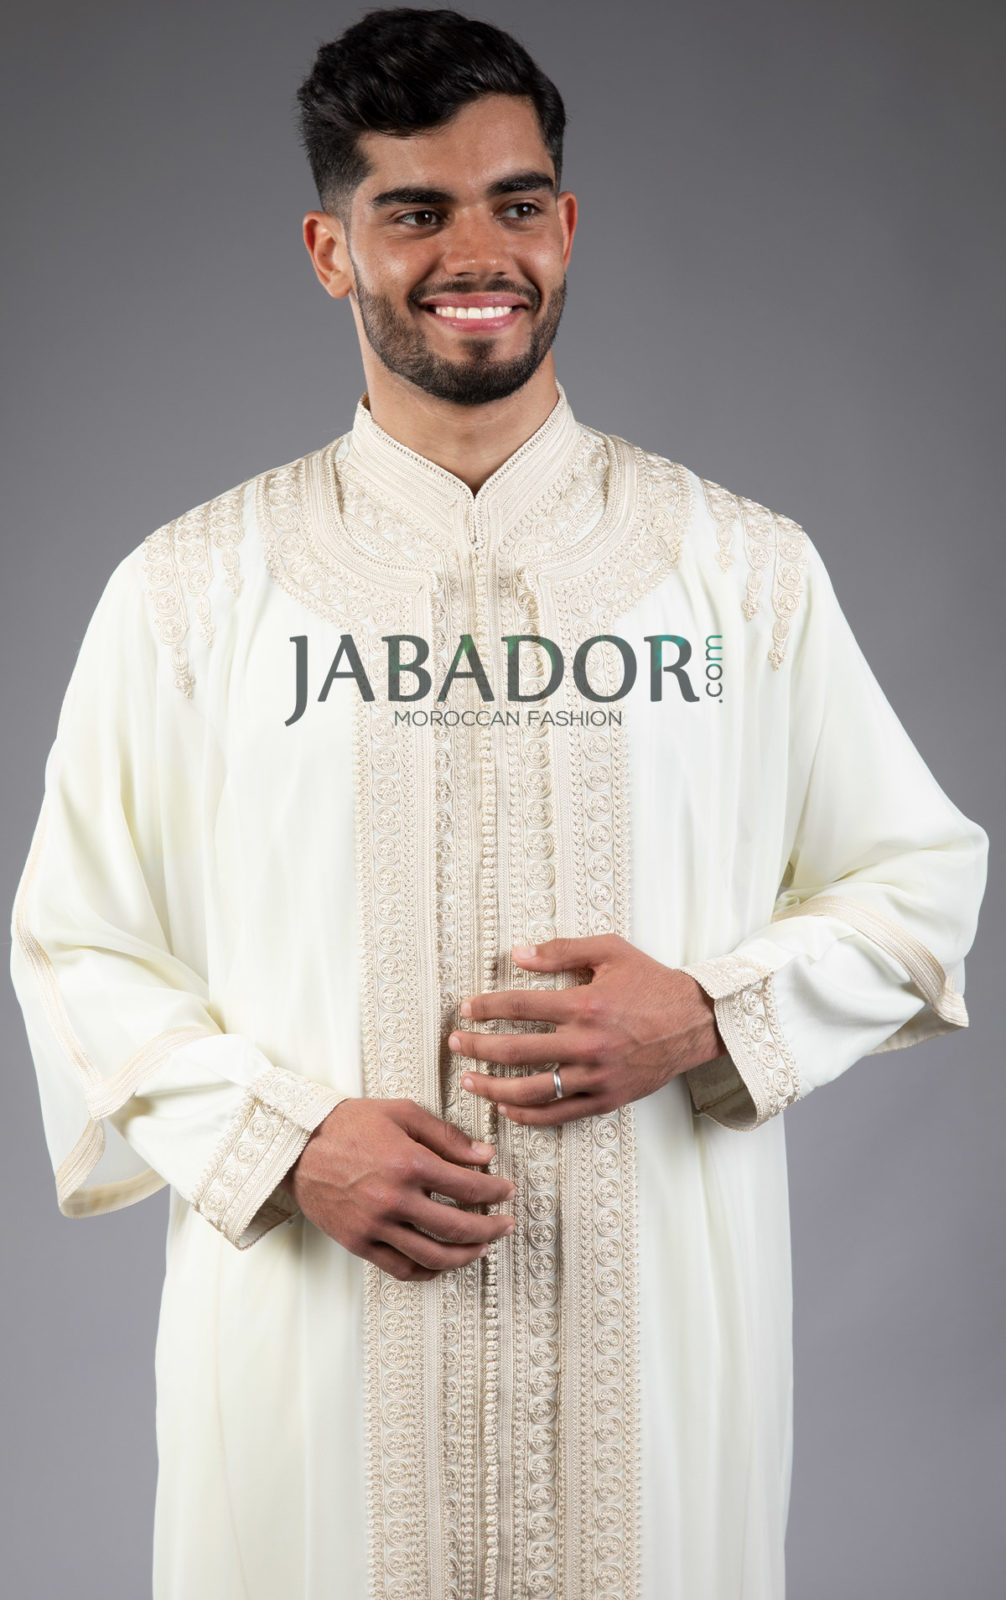 Jabador Marroquí Hombre Boda - Jabador.com